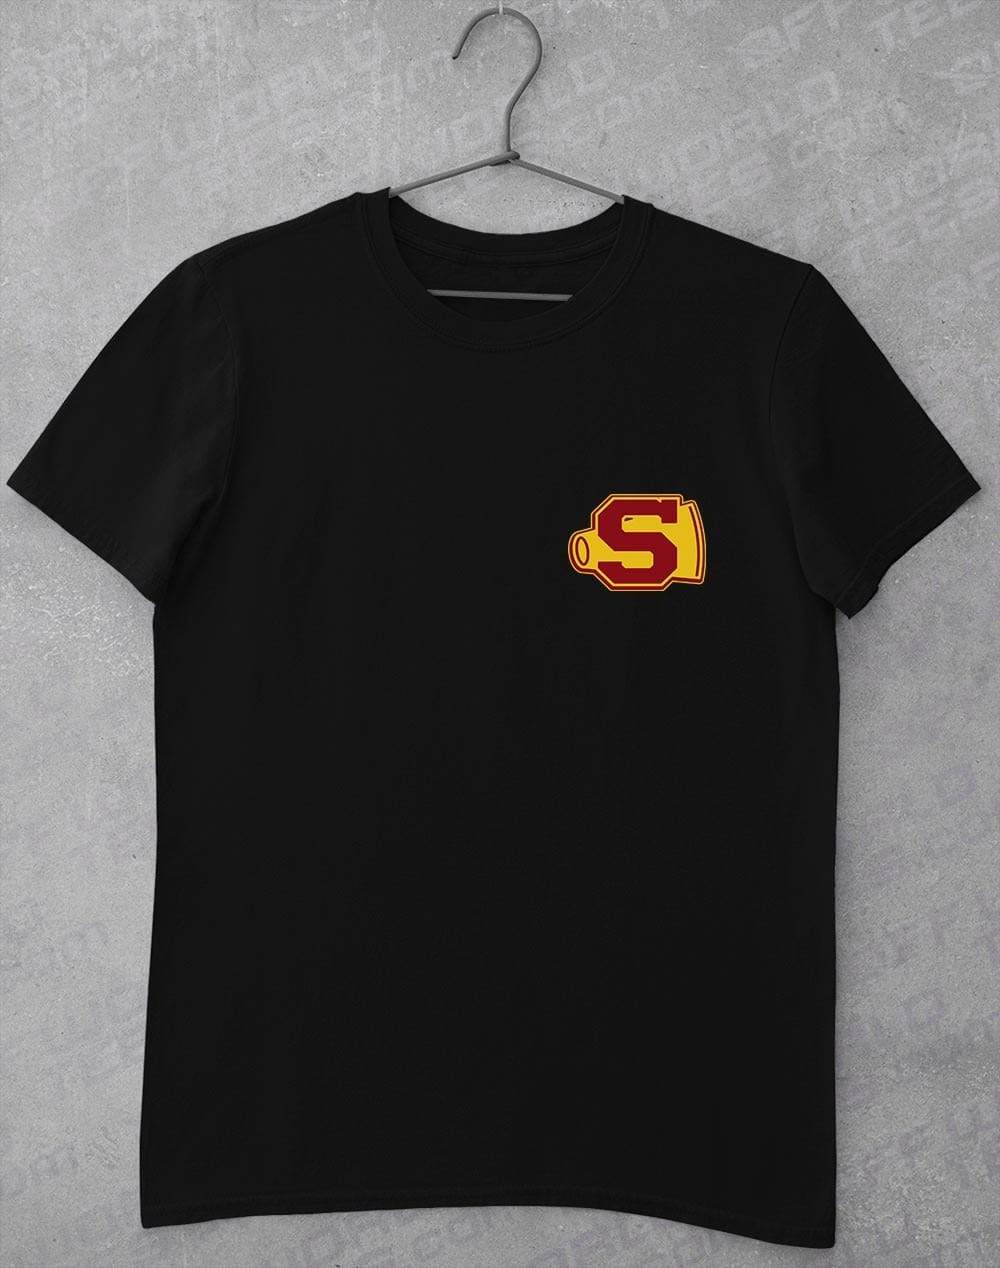 Pocket Print Sunnydale Cheerleader T-Shirt S / Black  - Off World Tees